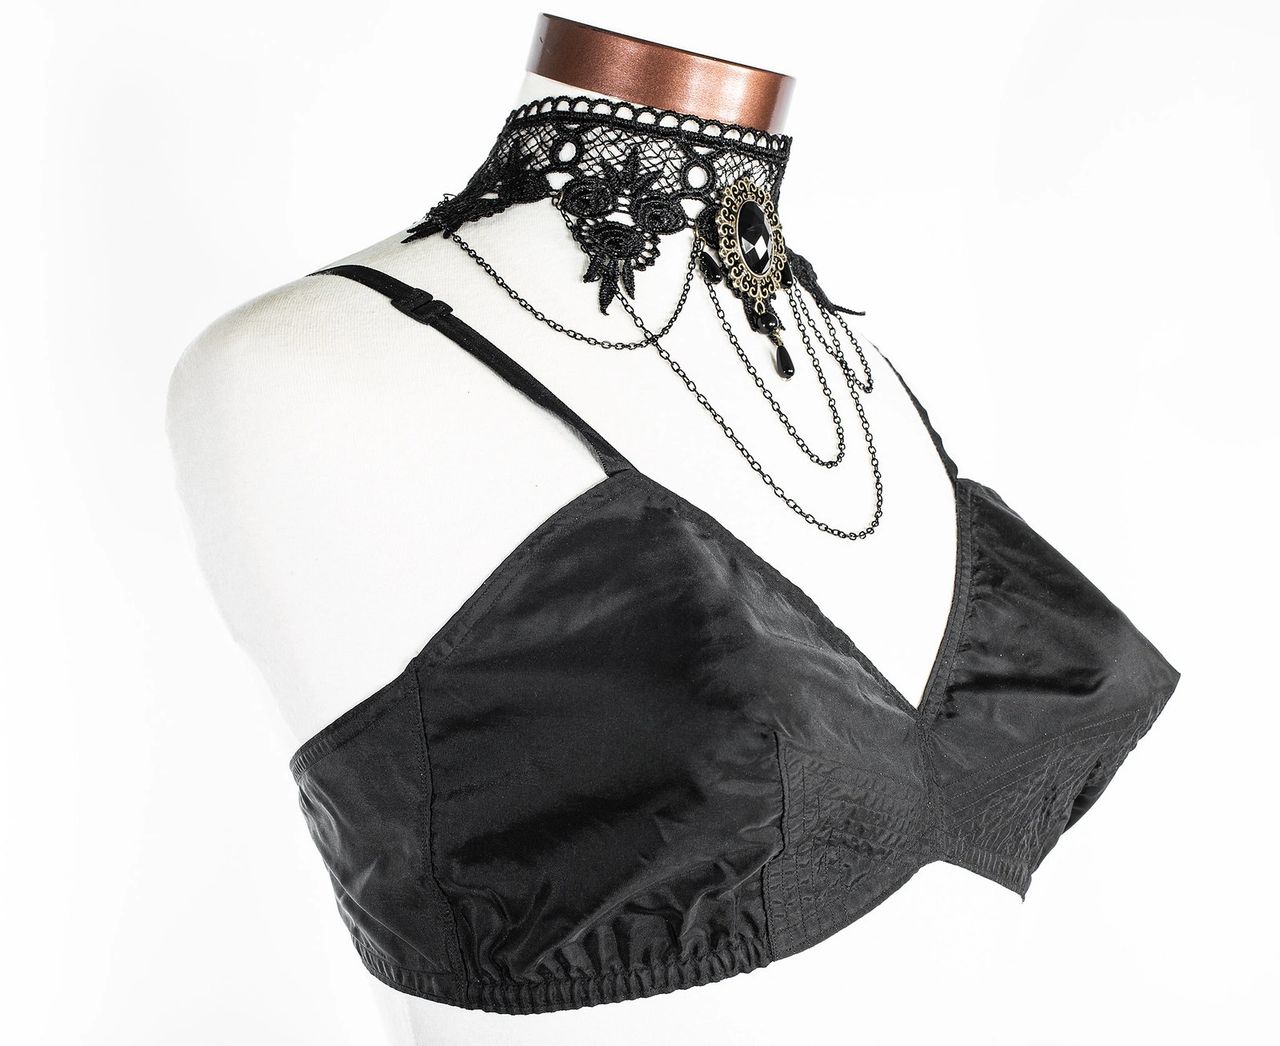 Cone Bra's History: Apparel Has Come A Long Way In Fashion